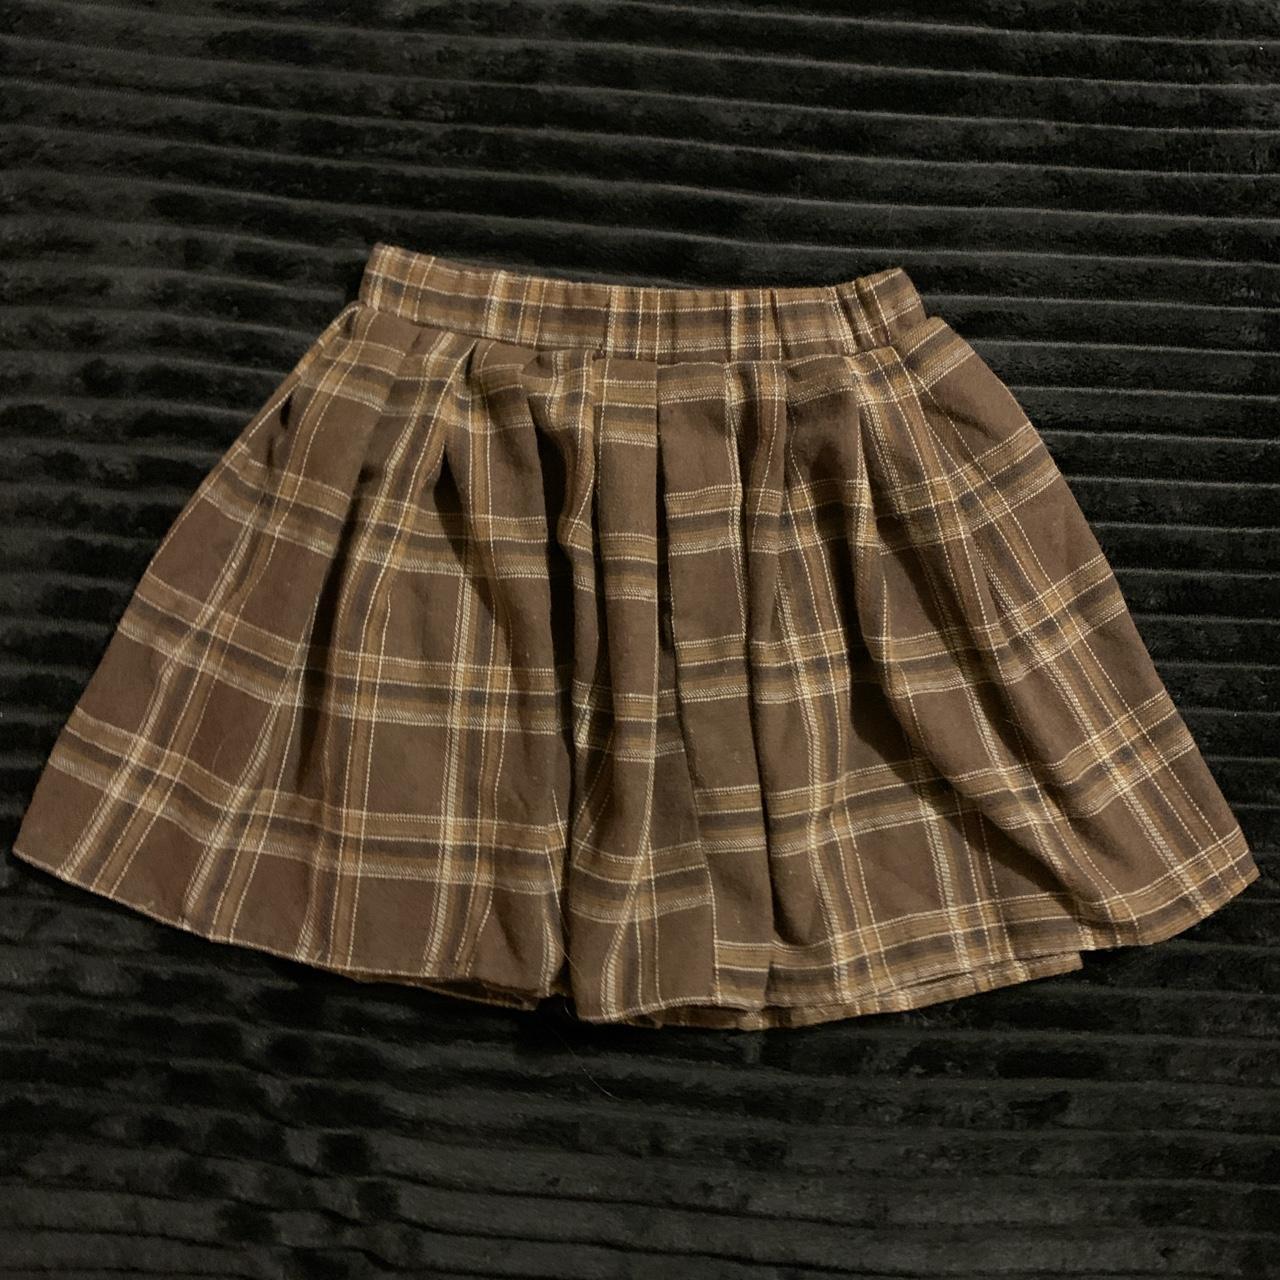 SHEIN Women's Brown and Tan Skirt